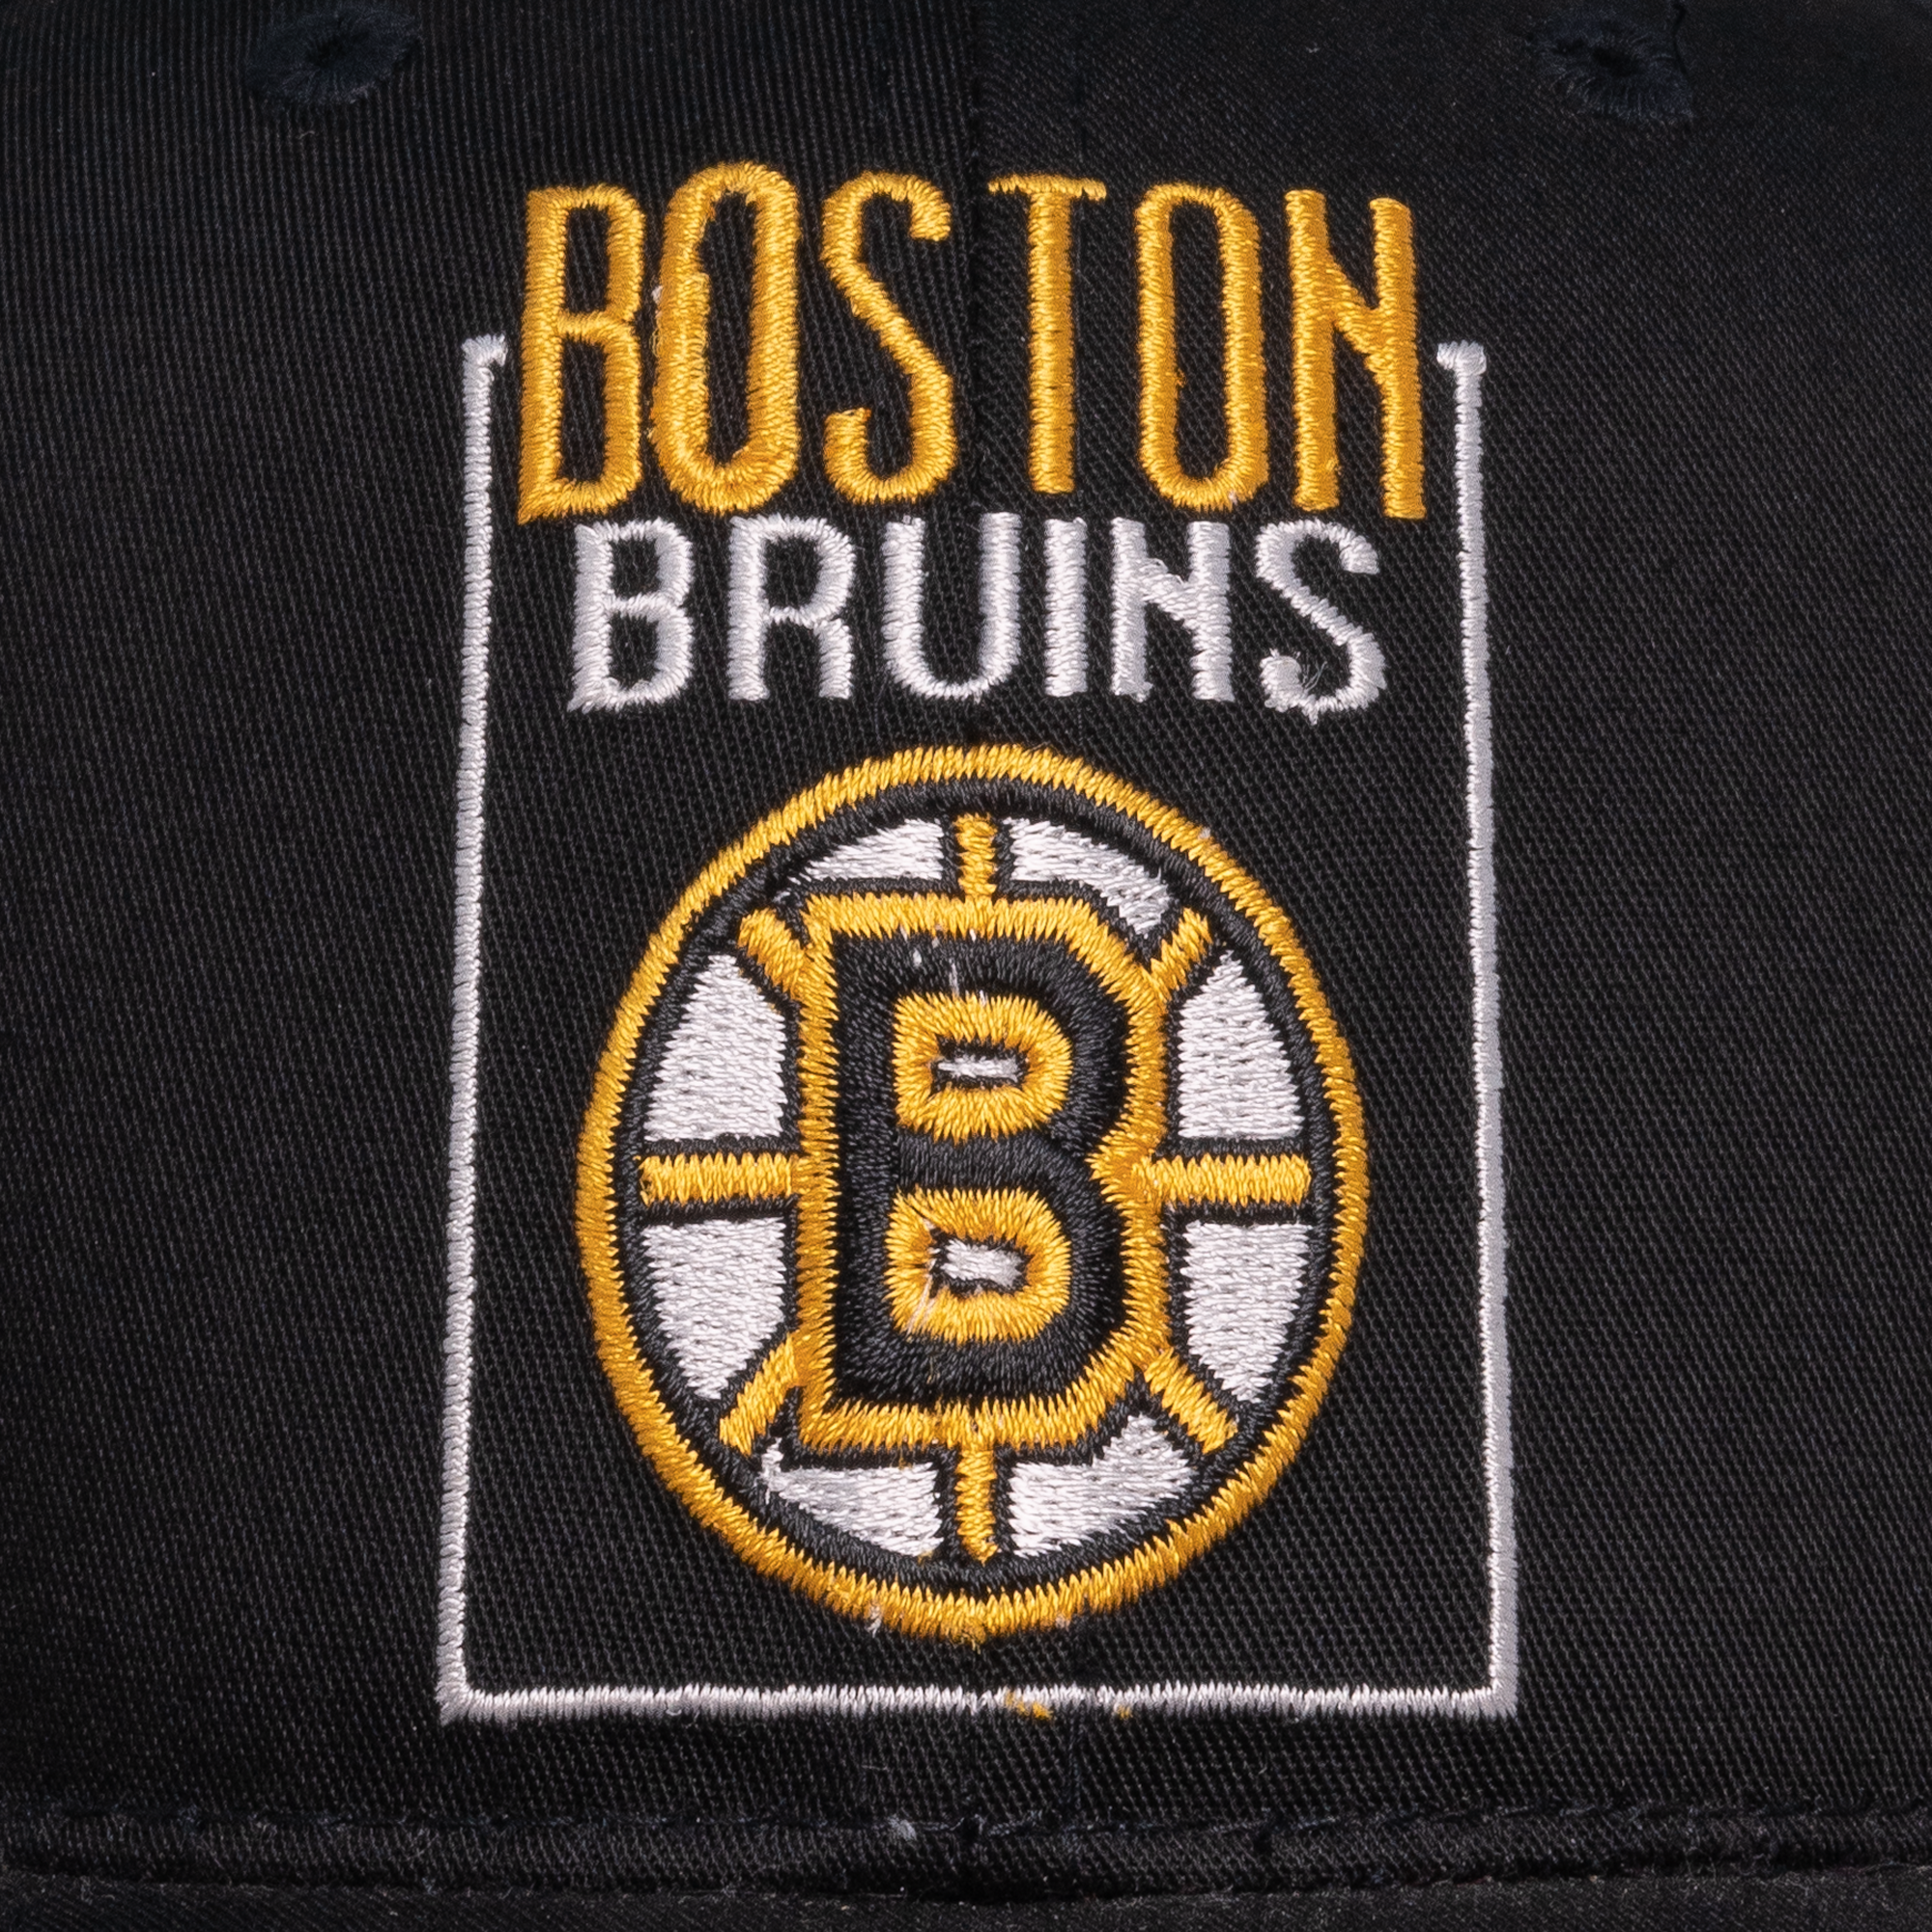 Boston Bruins Annco Snapback Black-PLUS